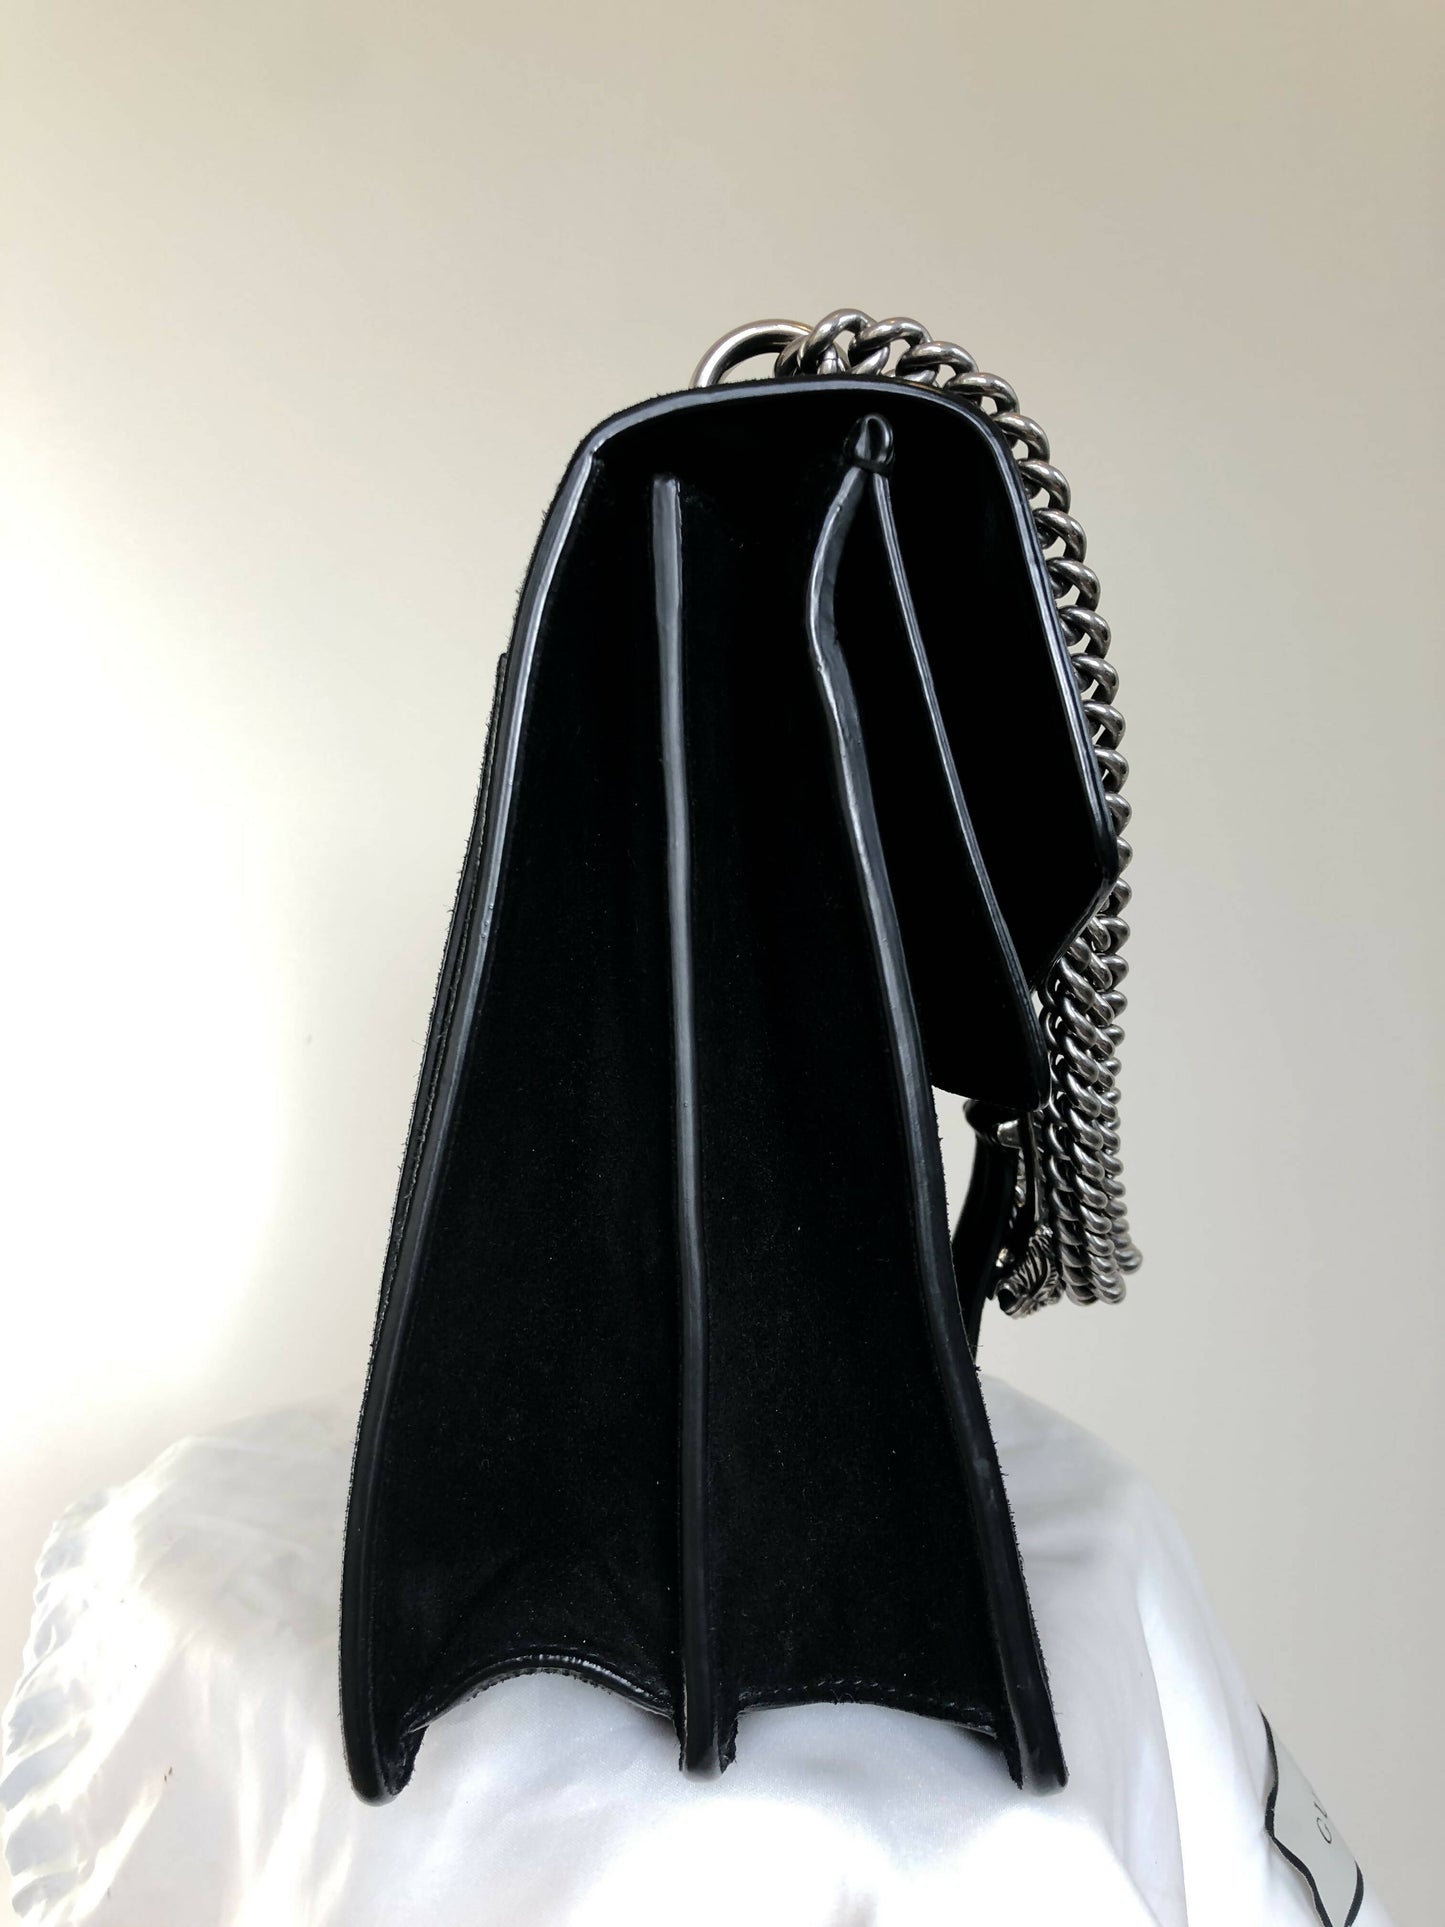 Gucci Dionysus Medium Bag